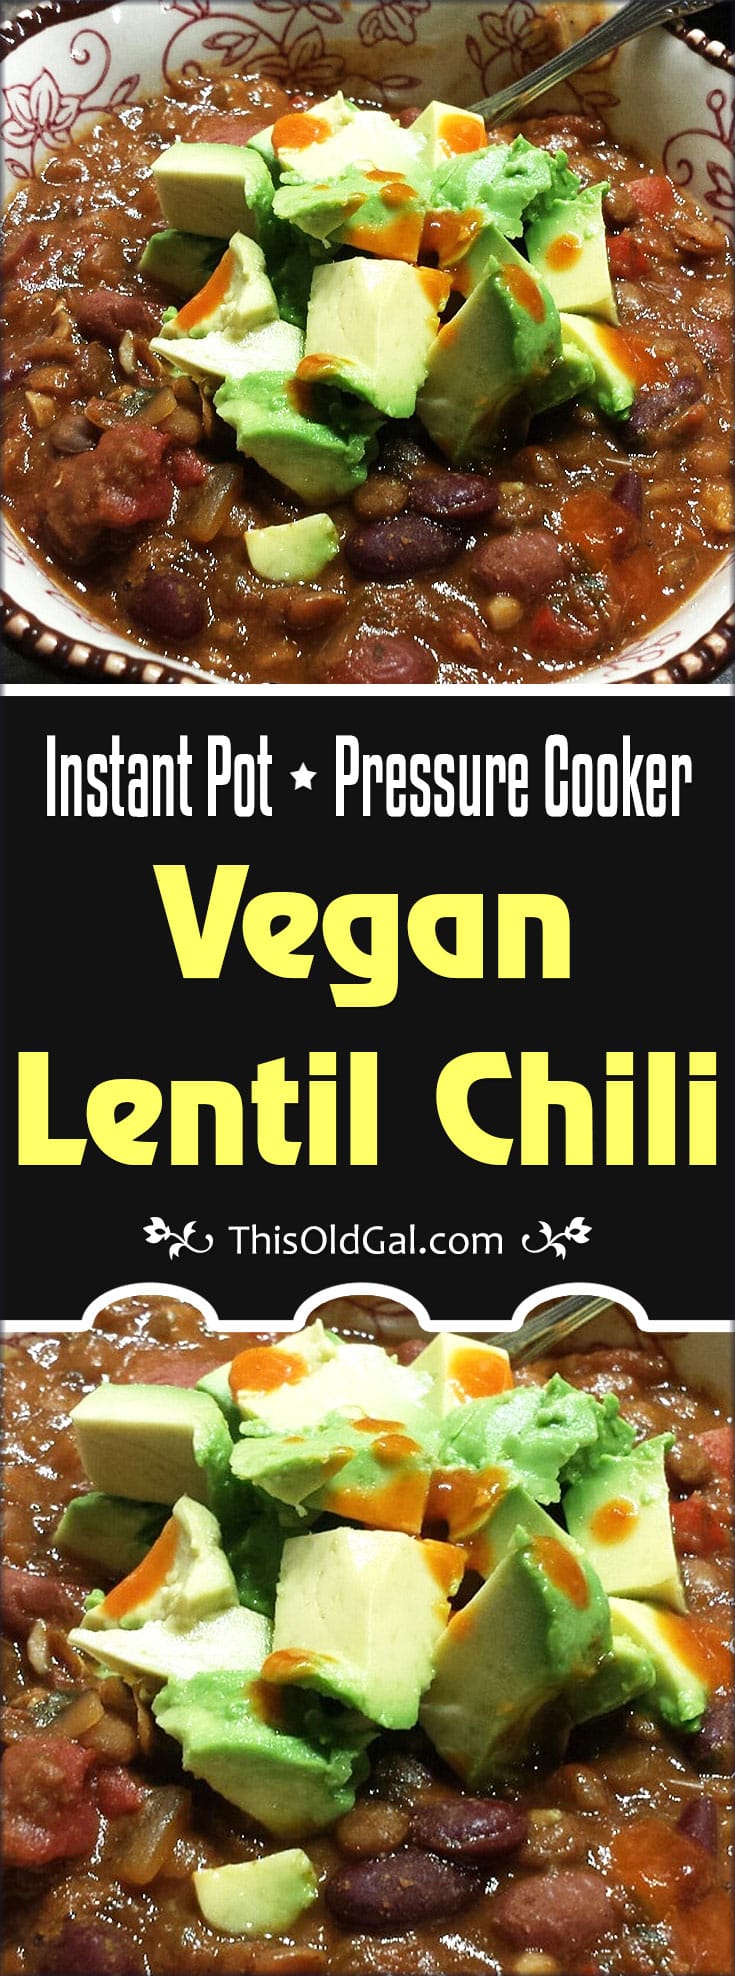 Pressure Cooker Vegan Lentil Chili